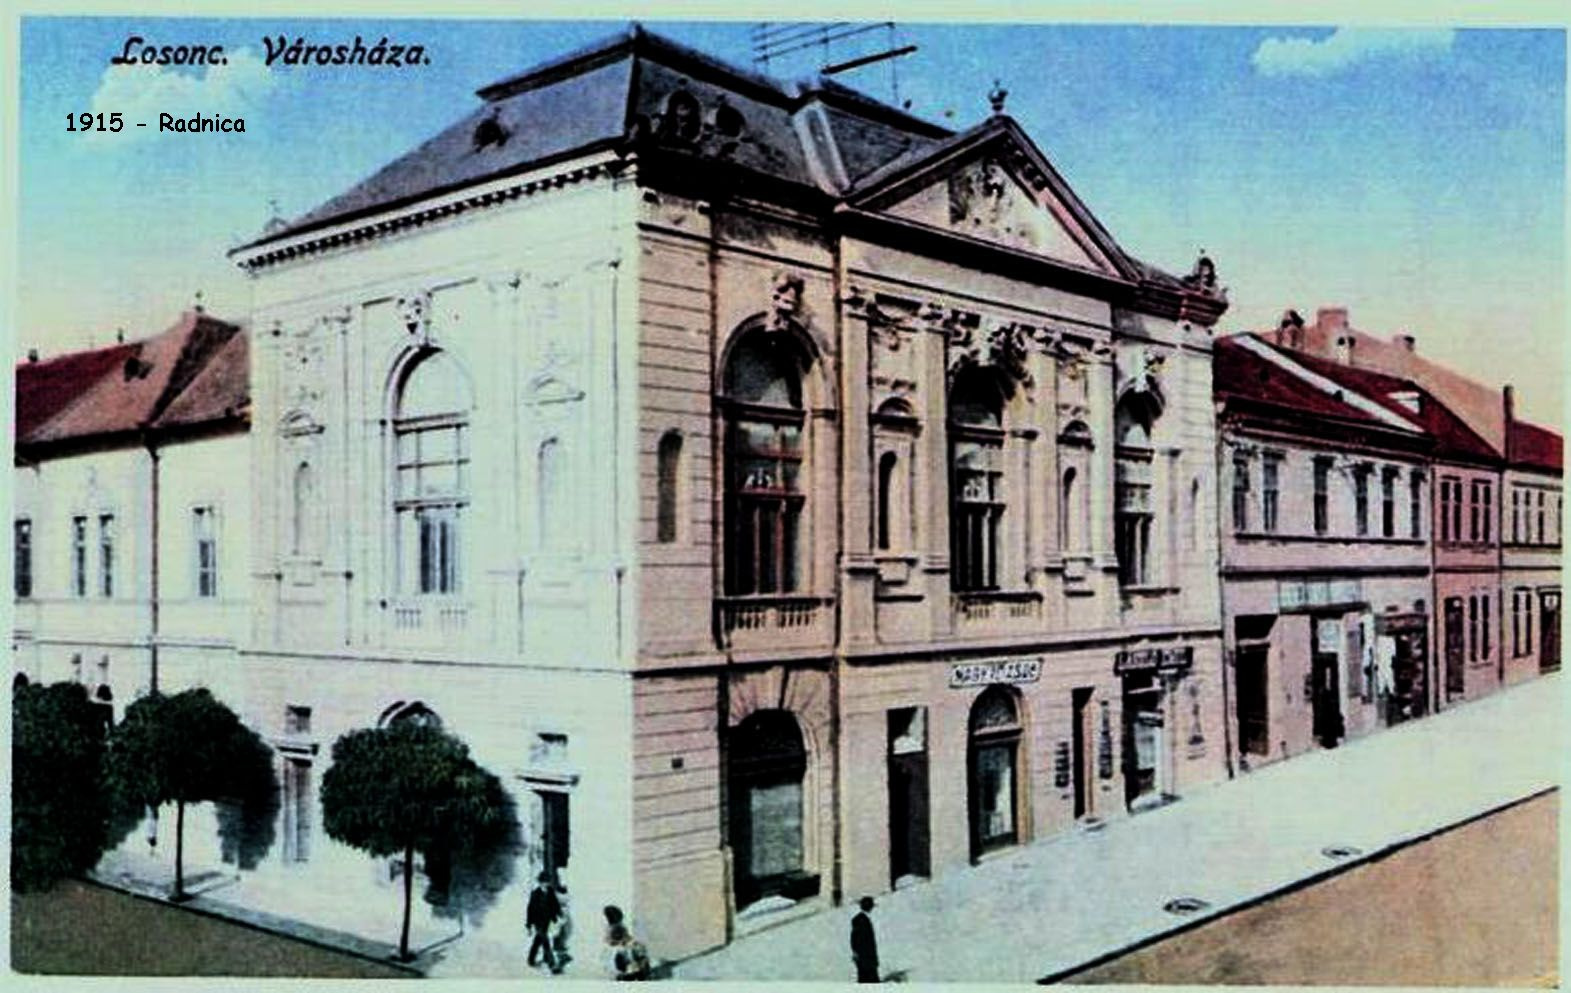 1915 - Radnica